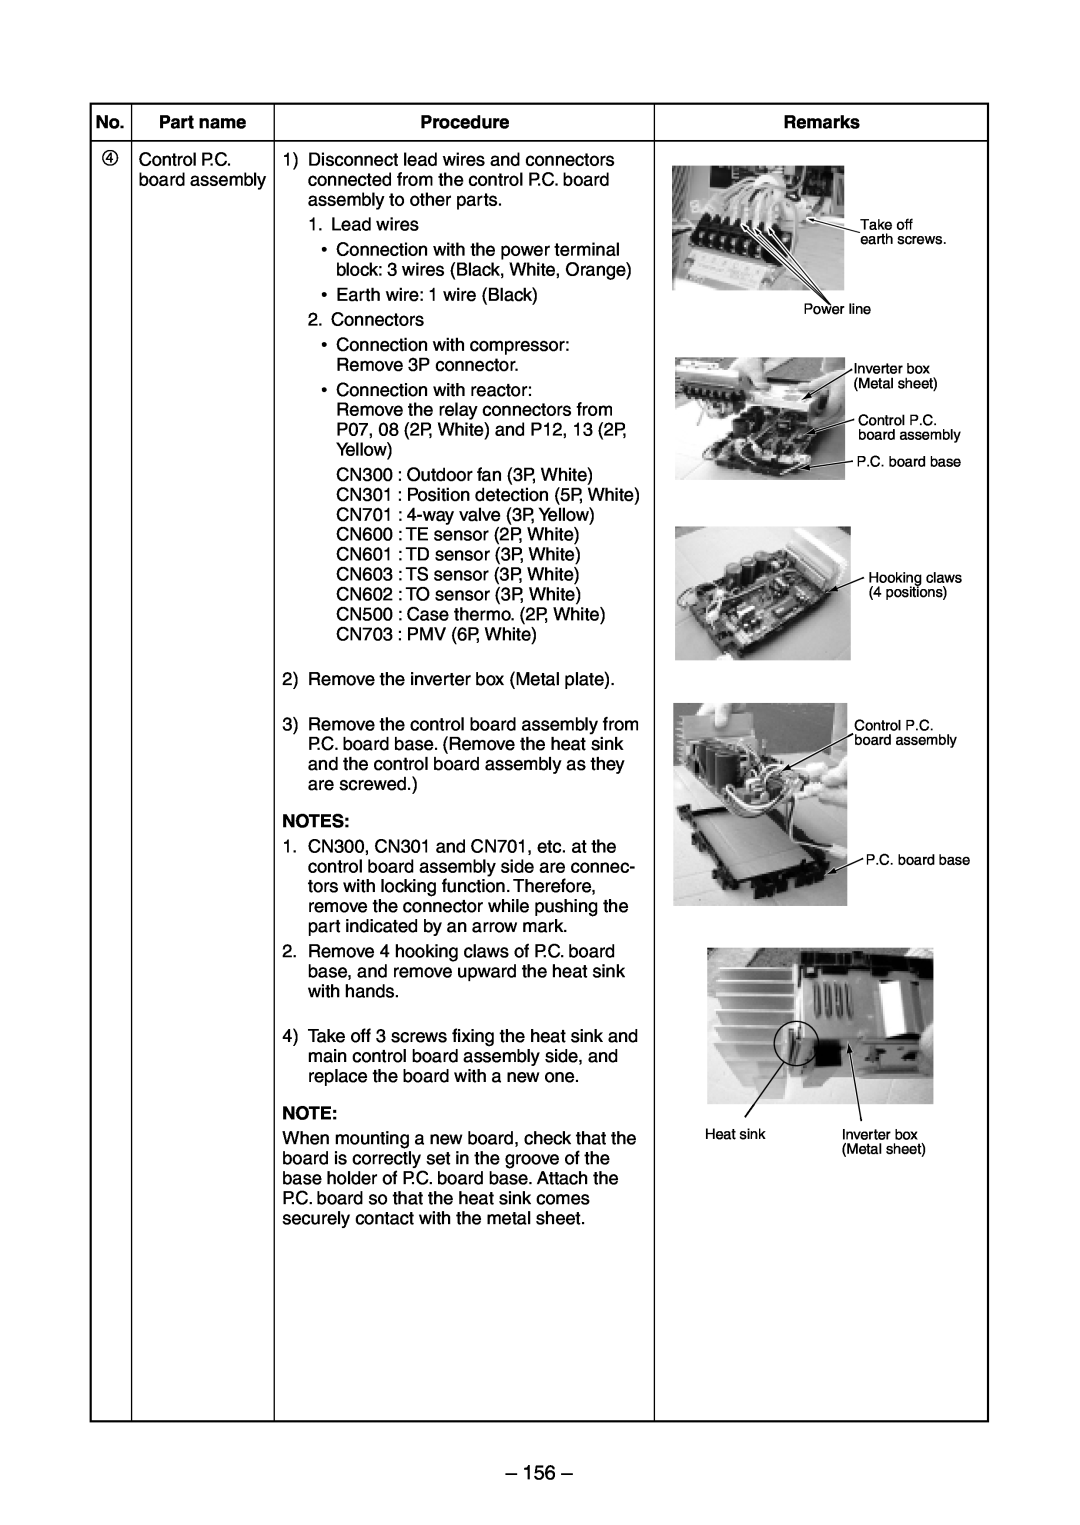 Toshiba RAV-SM800AT-E, RAV-SM800UT-E, RAV-SM560UT-E, RAV-SM560AT-E, RAV-SM560BT-E service manual 156, Procedure, Remarks, Notes 